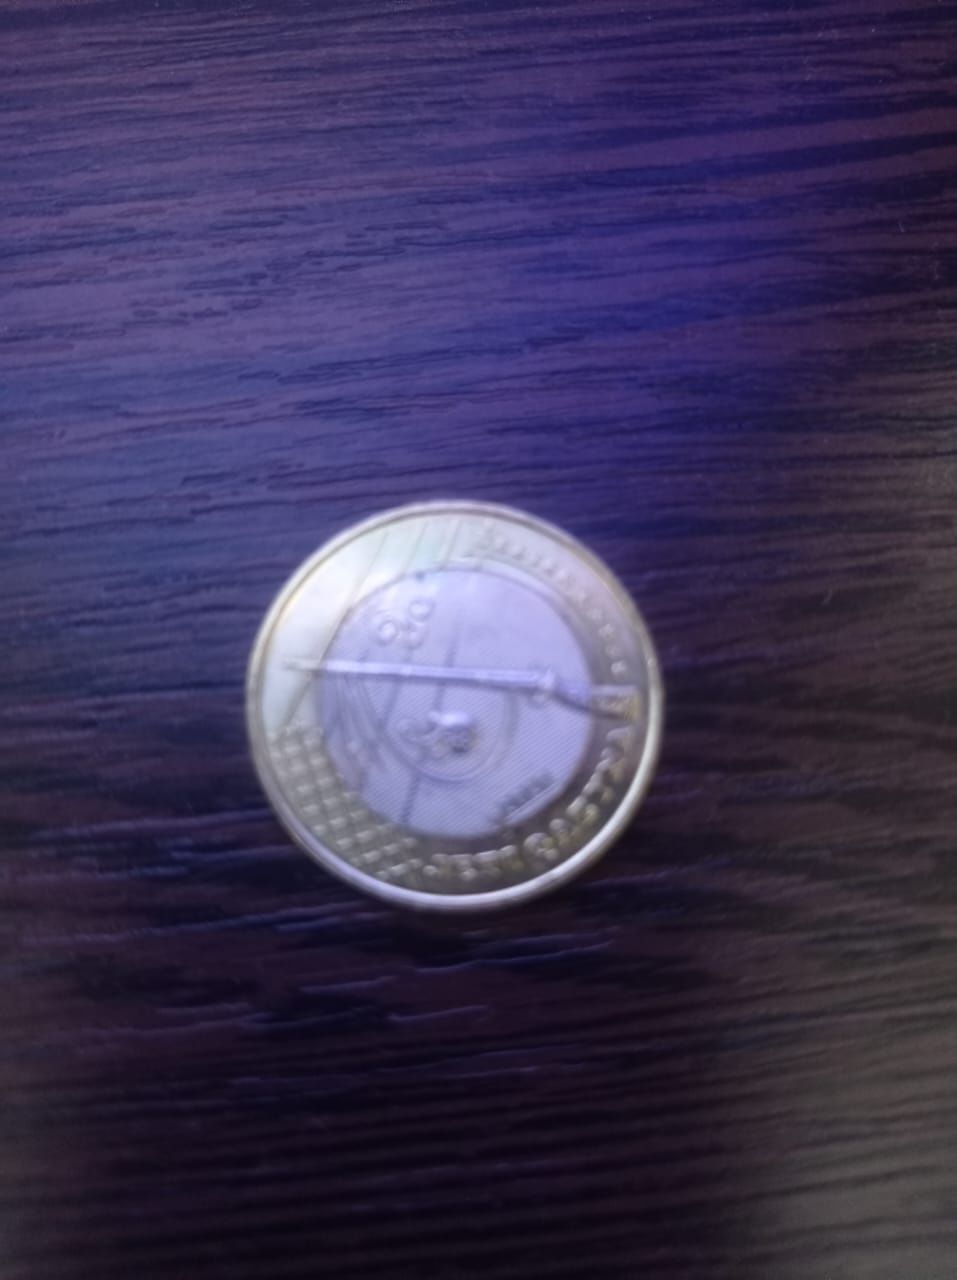 Монеты 100 тенге юбилейные